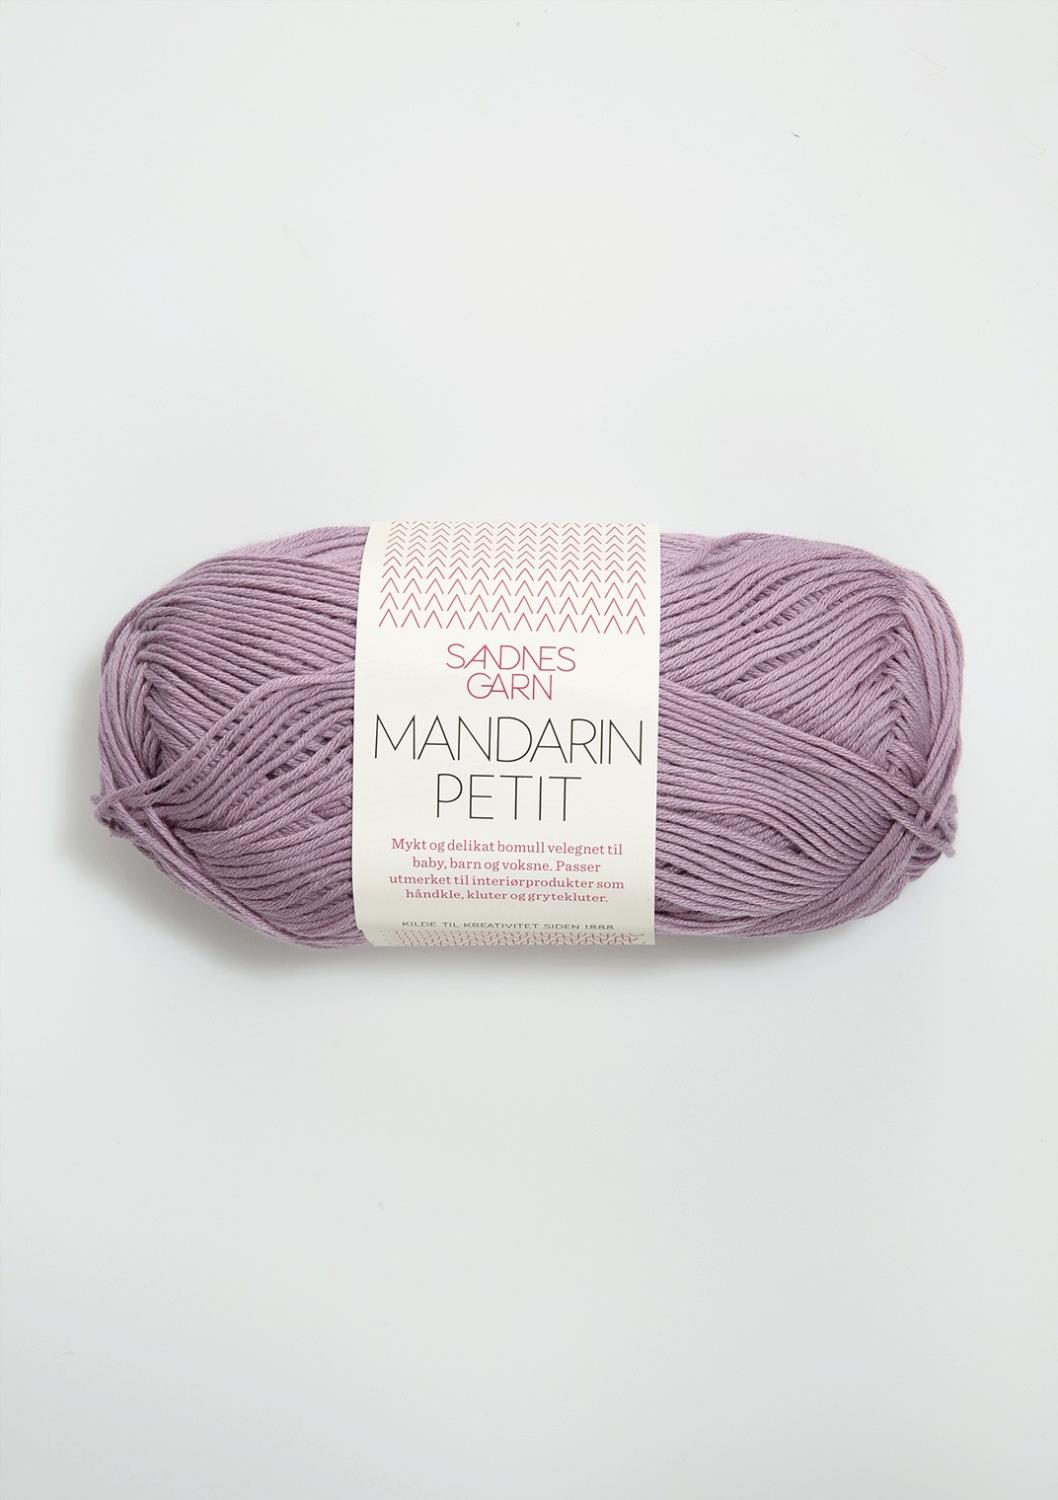 Mandarin Petit Sandnes 4622 - Lys Lyng